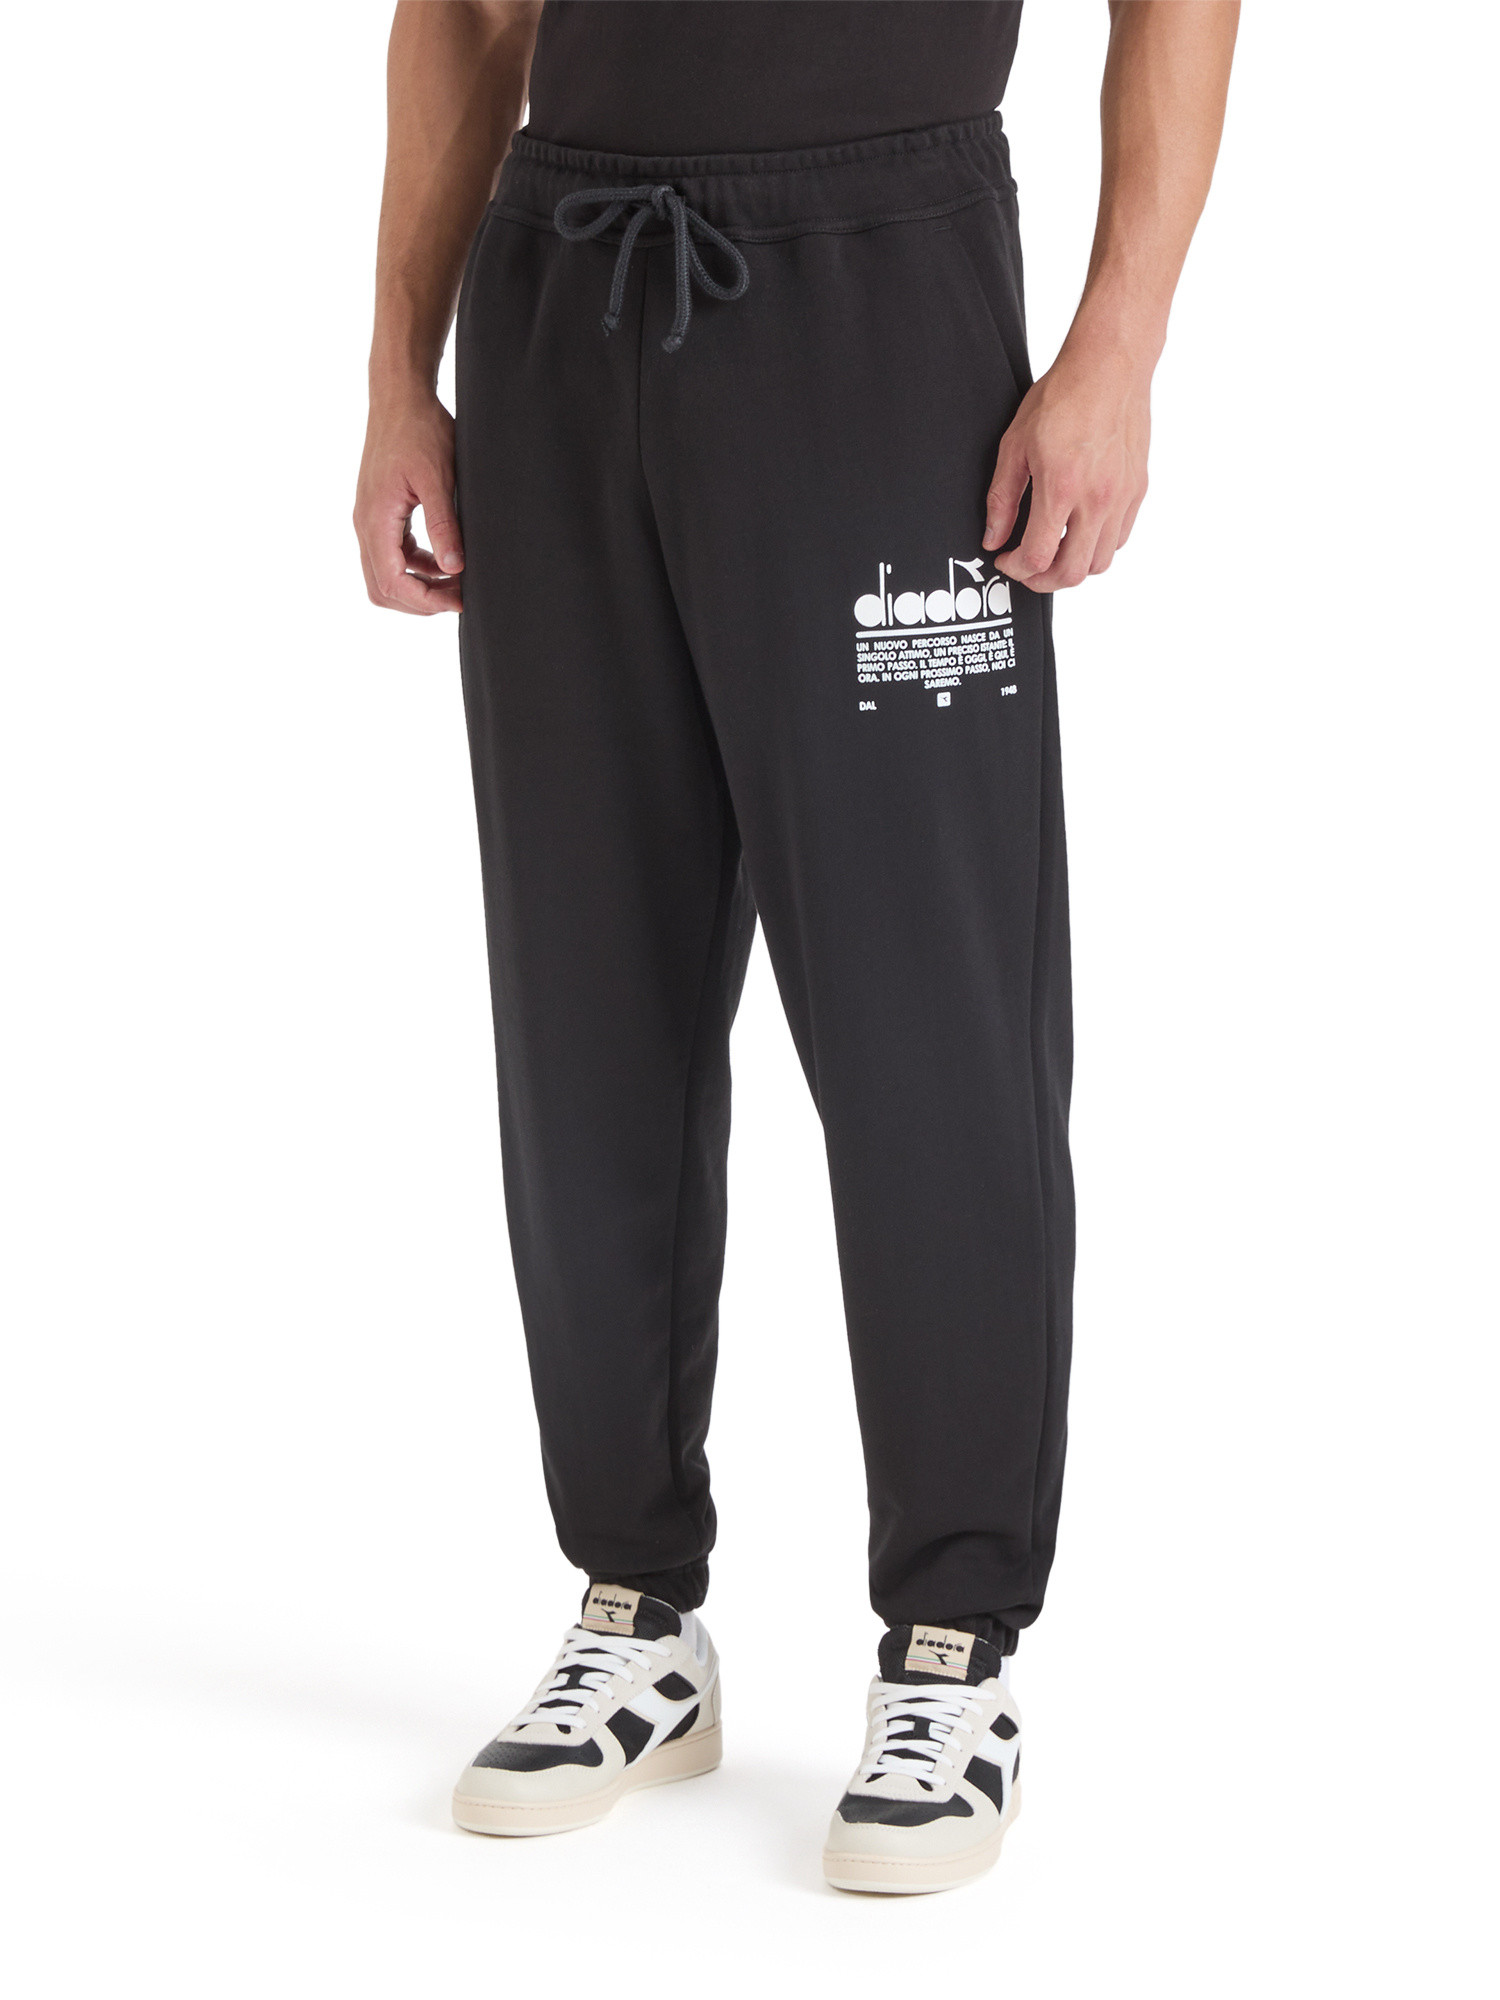 Diadora - Manifesto sports trousers with cotton print, Black, large